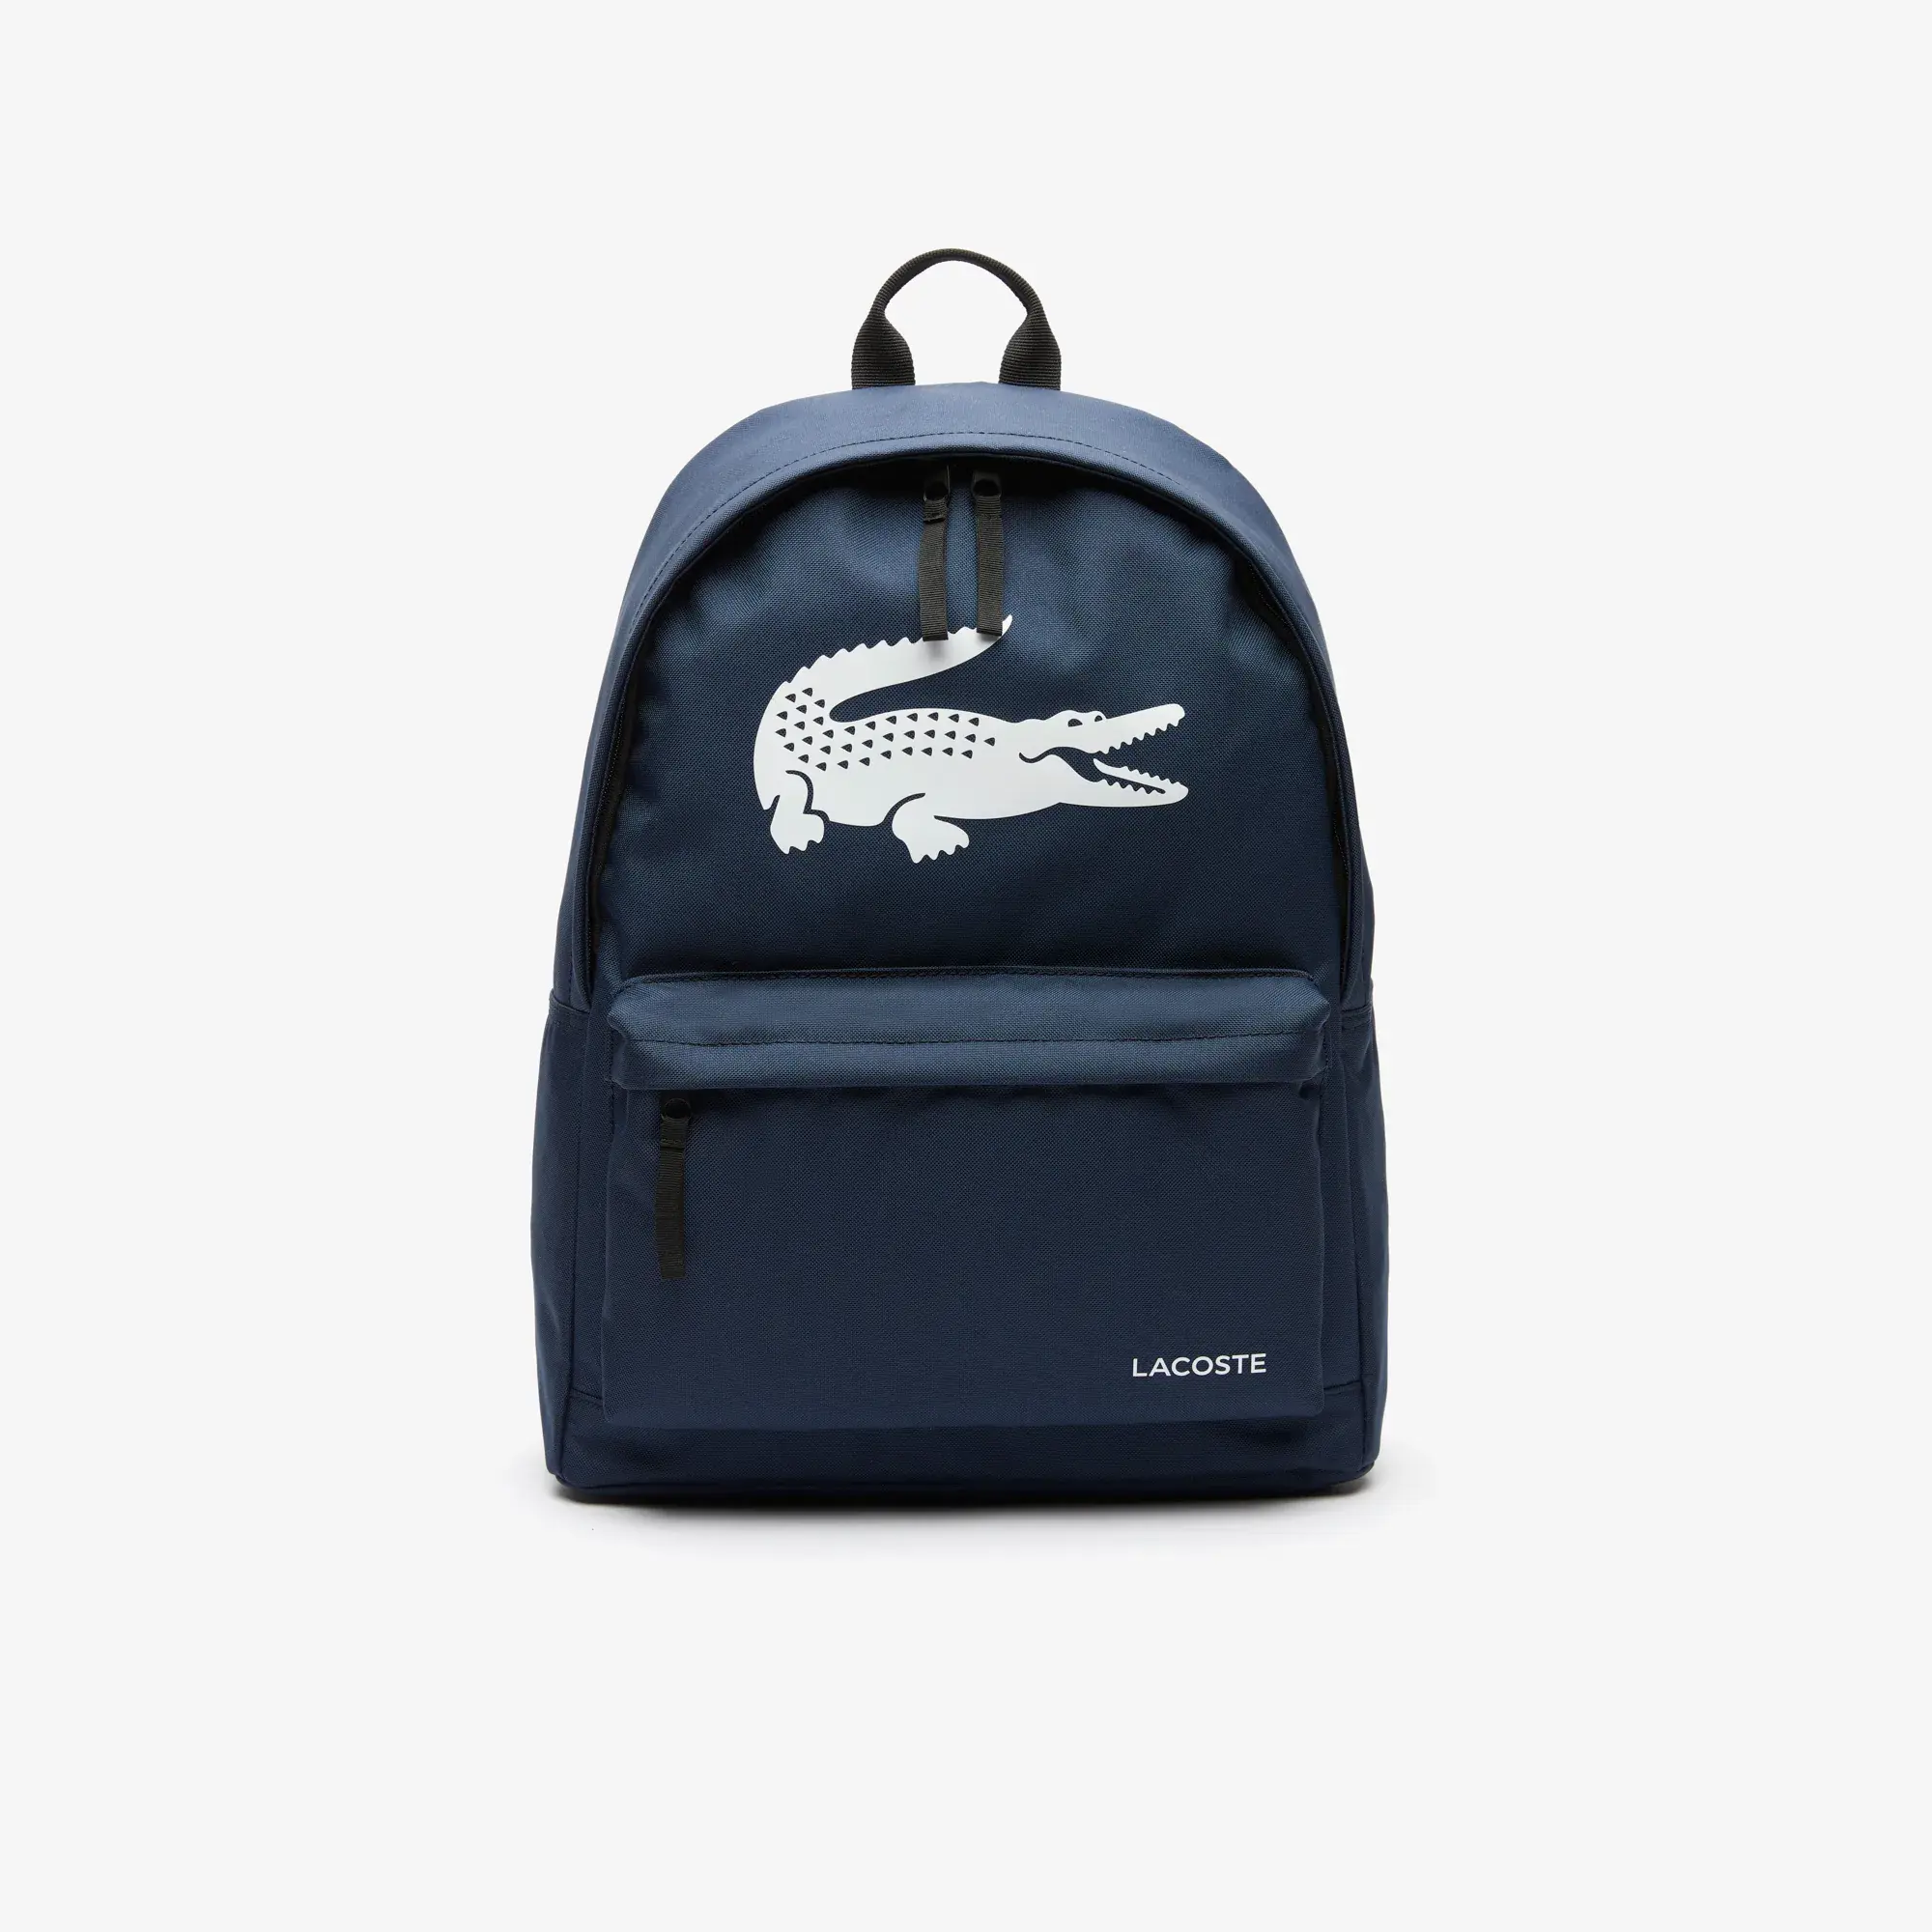 Lacoste Men’s Backpack with Laptop Pocket. 1